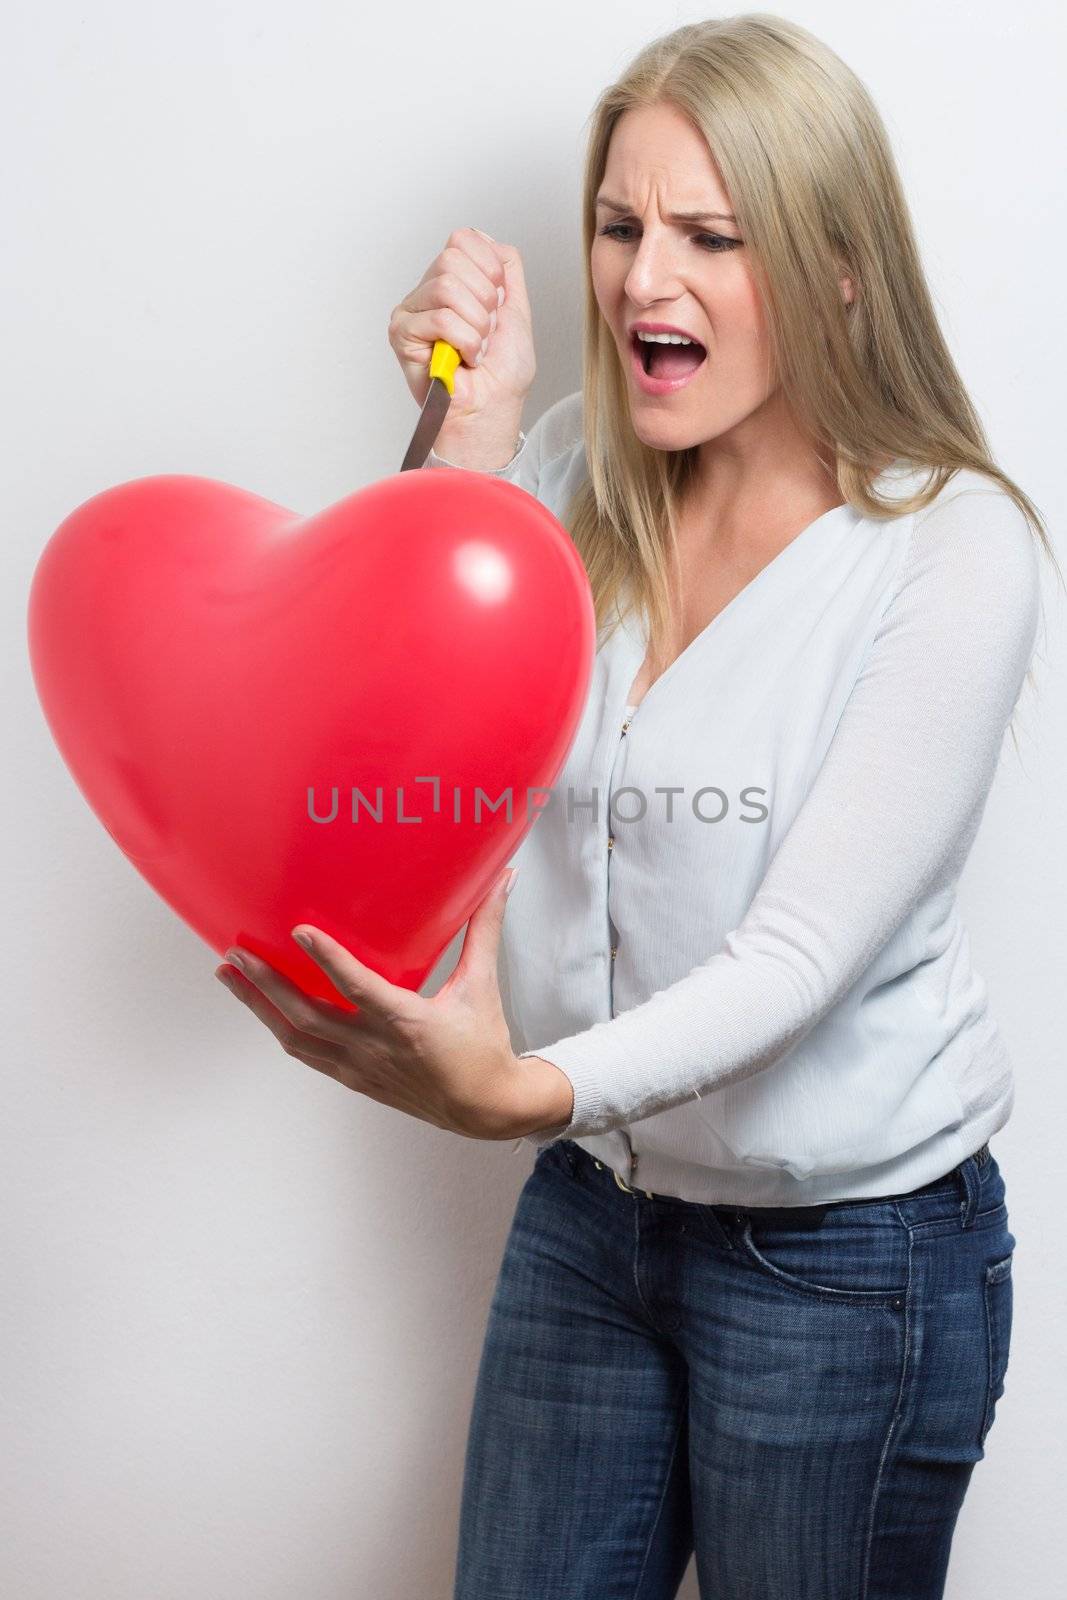 Woman destroying heart after breakup by dwaschnig_photo